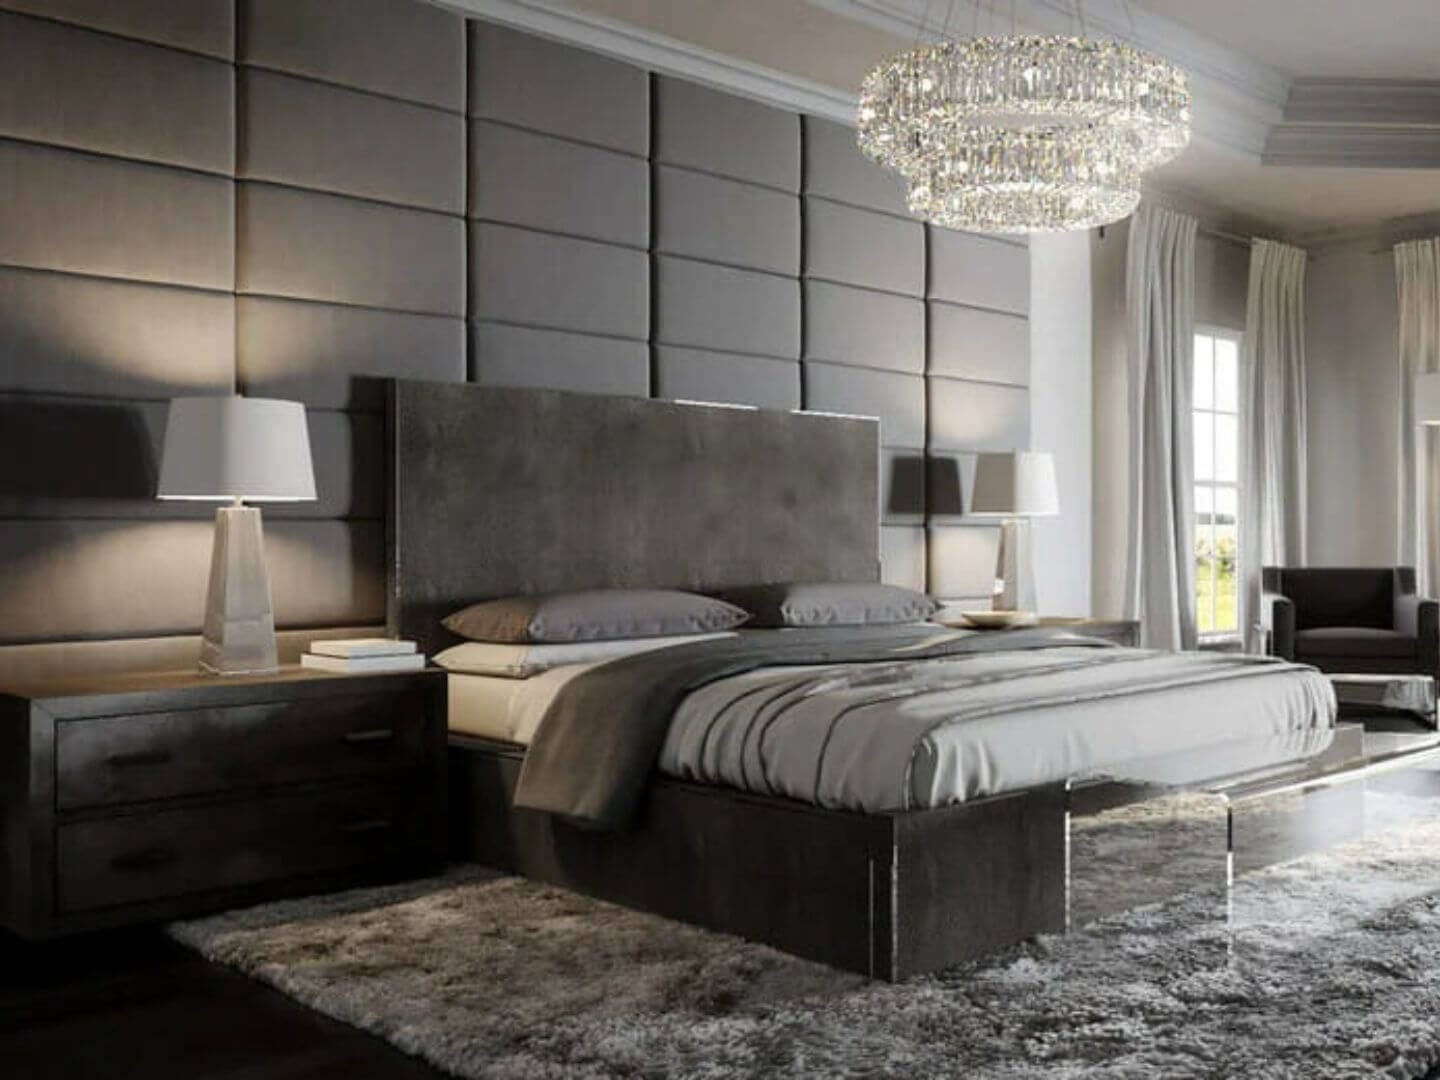 Modern and glamorous bedroom